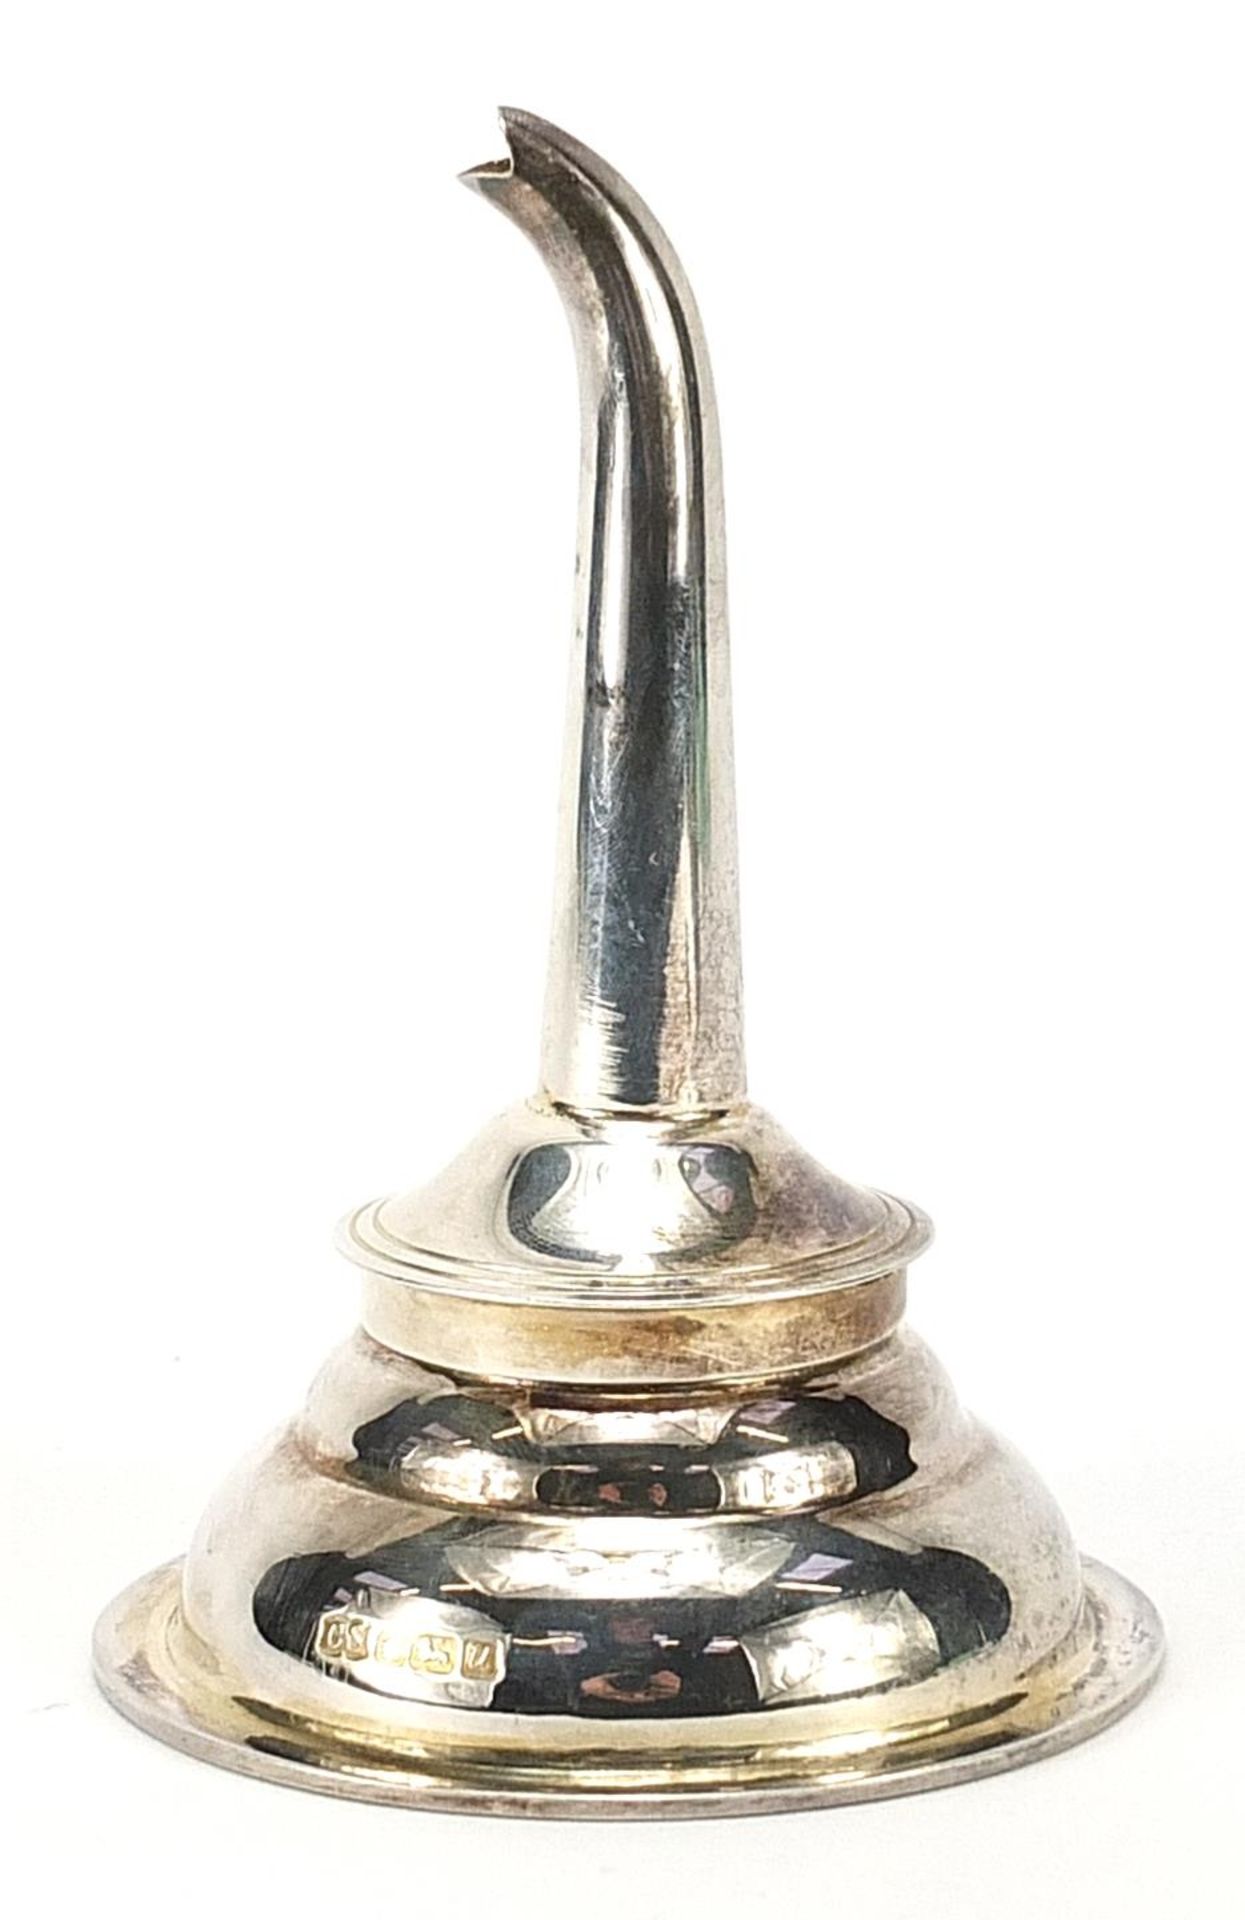 Camelot Silverware Ltd, silver wine funnel, Sheffield 1994, 12.5cm high, 110.7g